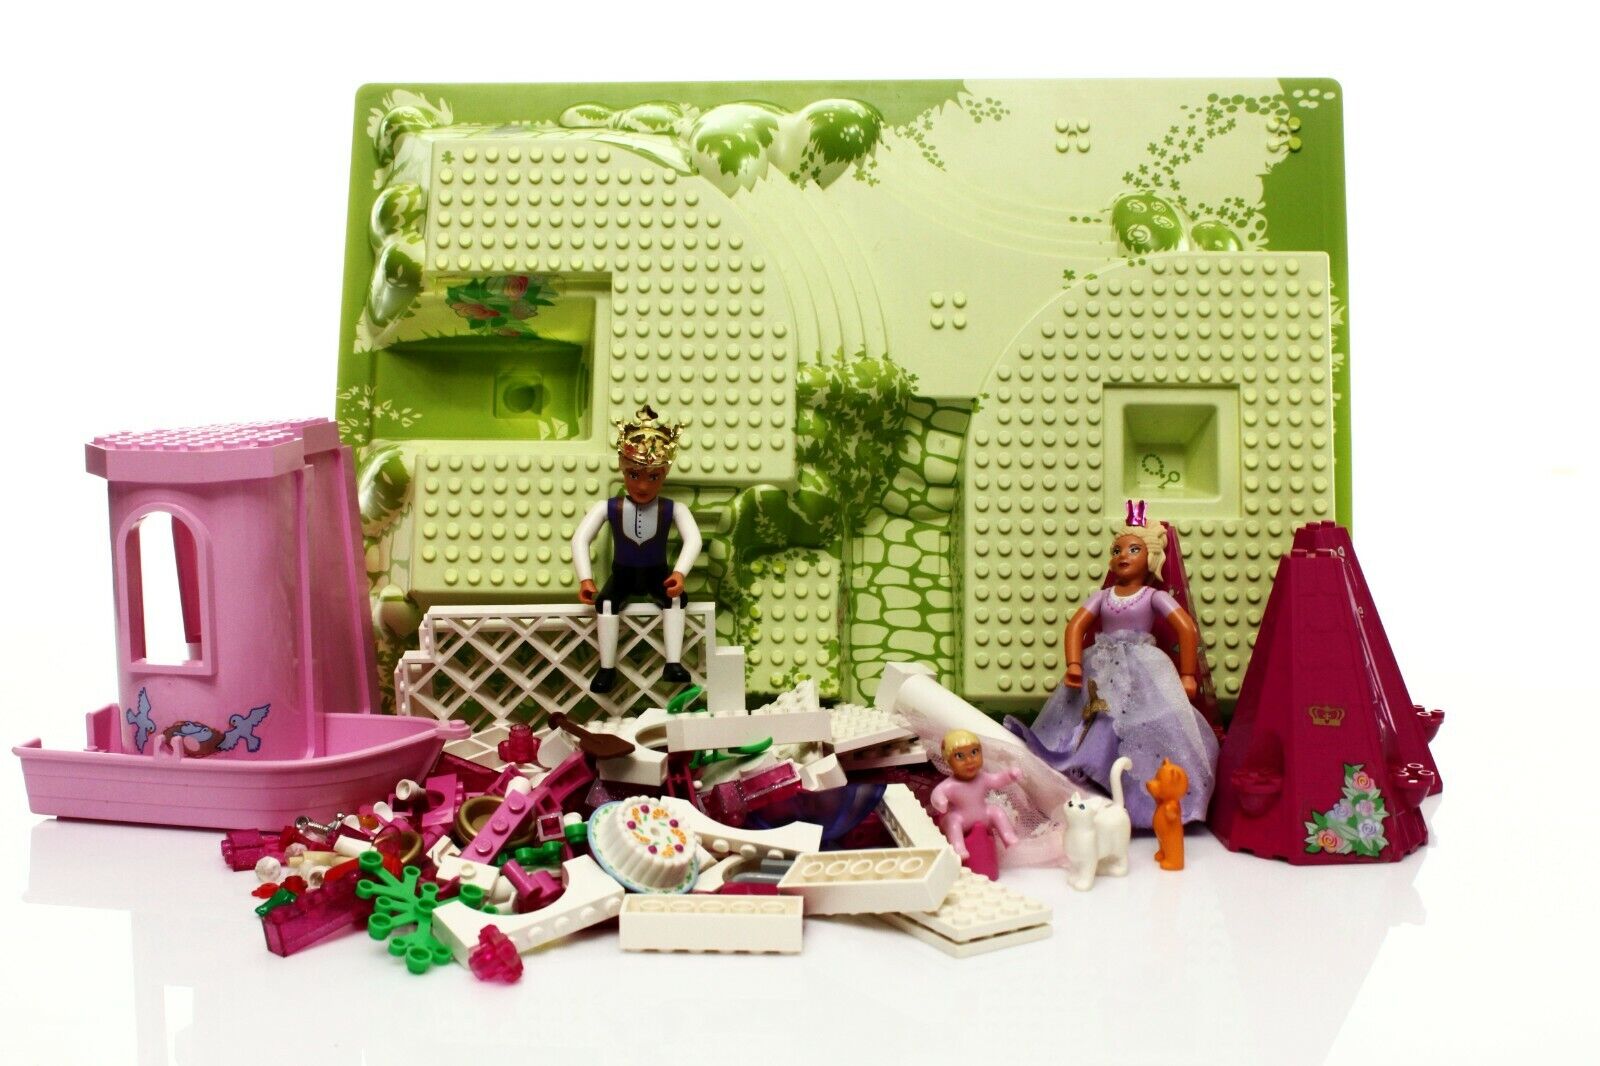 Lego Belville Fairy-Tale 7582 Royal Palace 99% complete 2007 | eBay